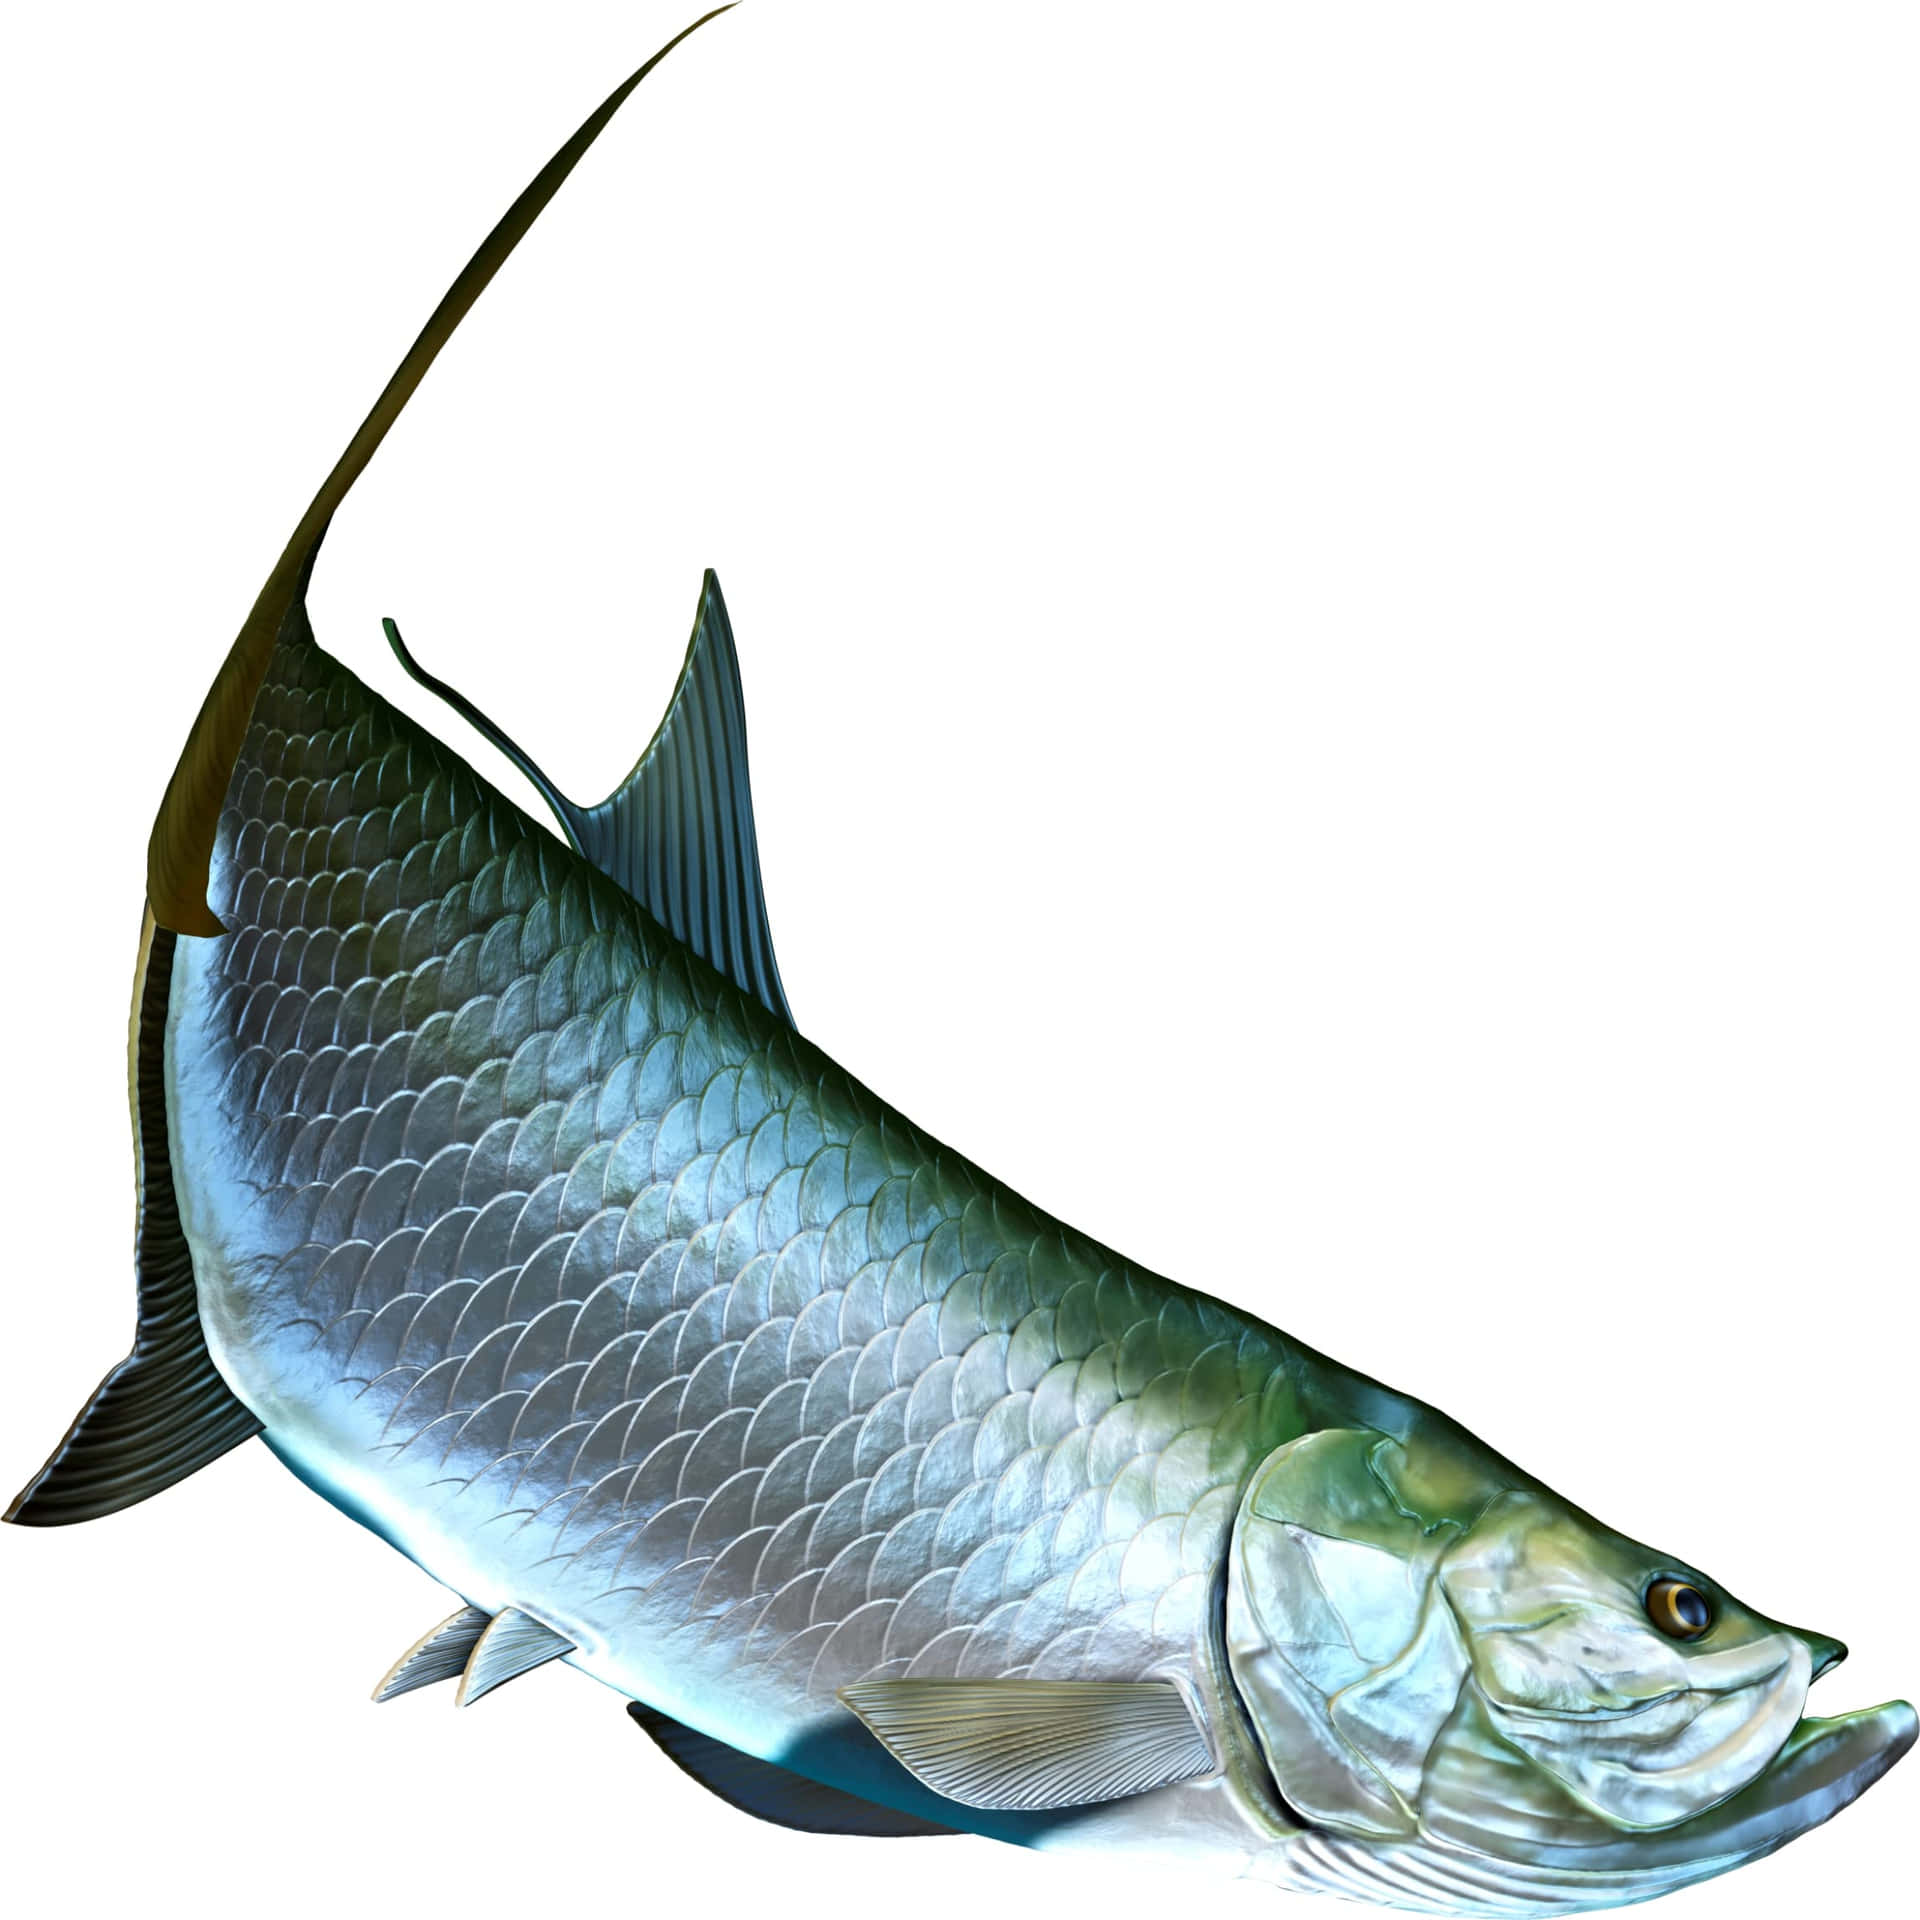 Majestic Tarpon Fish Illustration Wallpaper